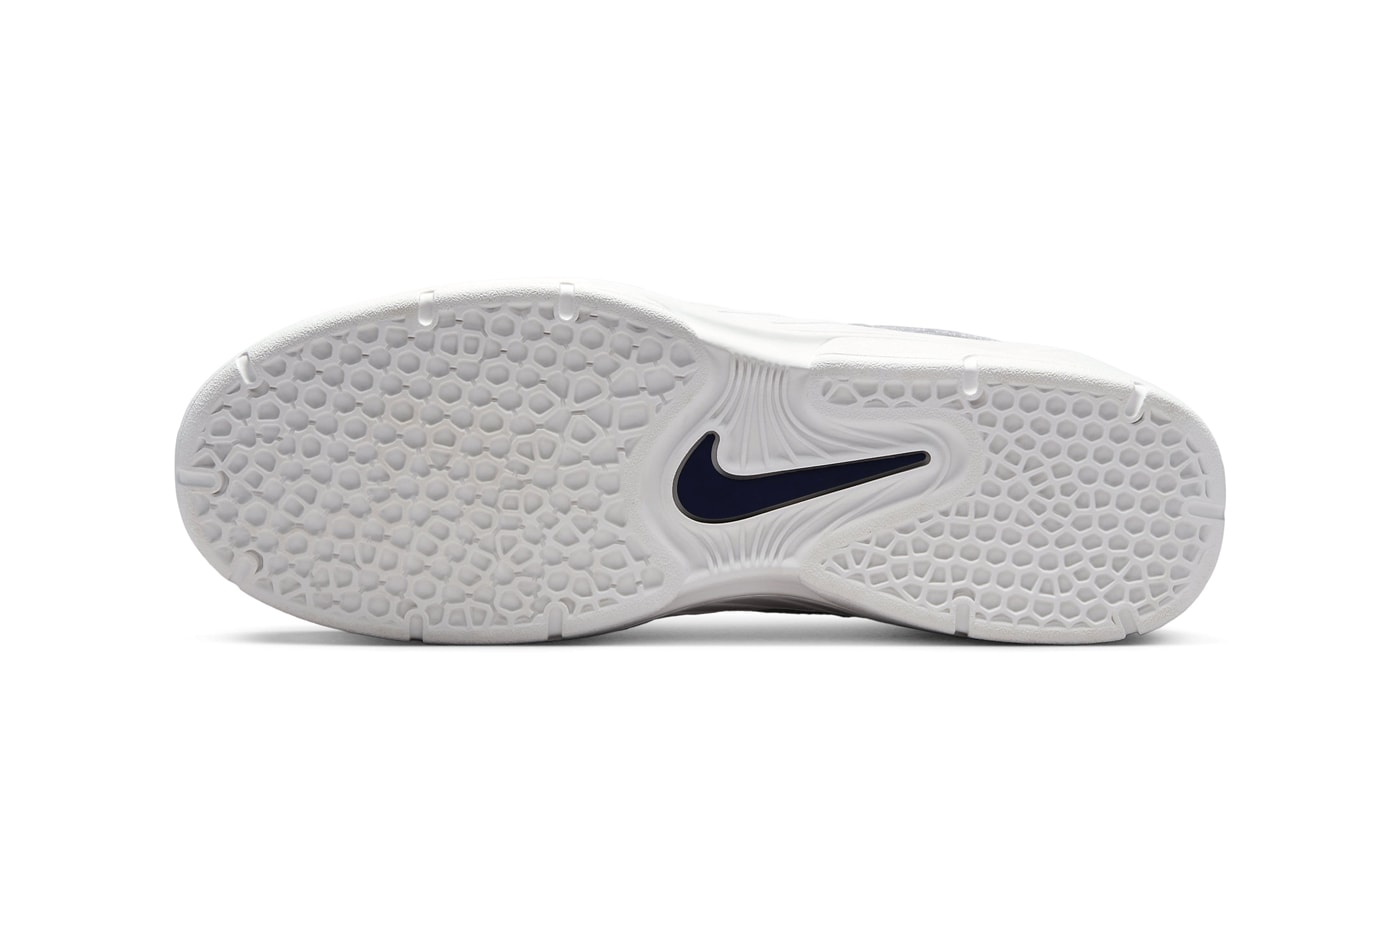 Nike SB Vertebrae Surfaces in a Minimal "Georgetown" Colorway FD4691-002 Release all white grey suede mesh